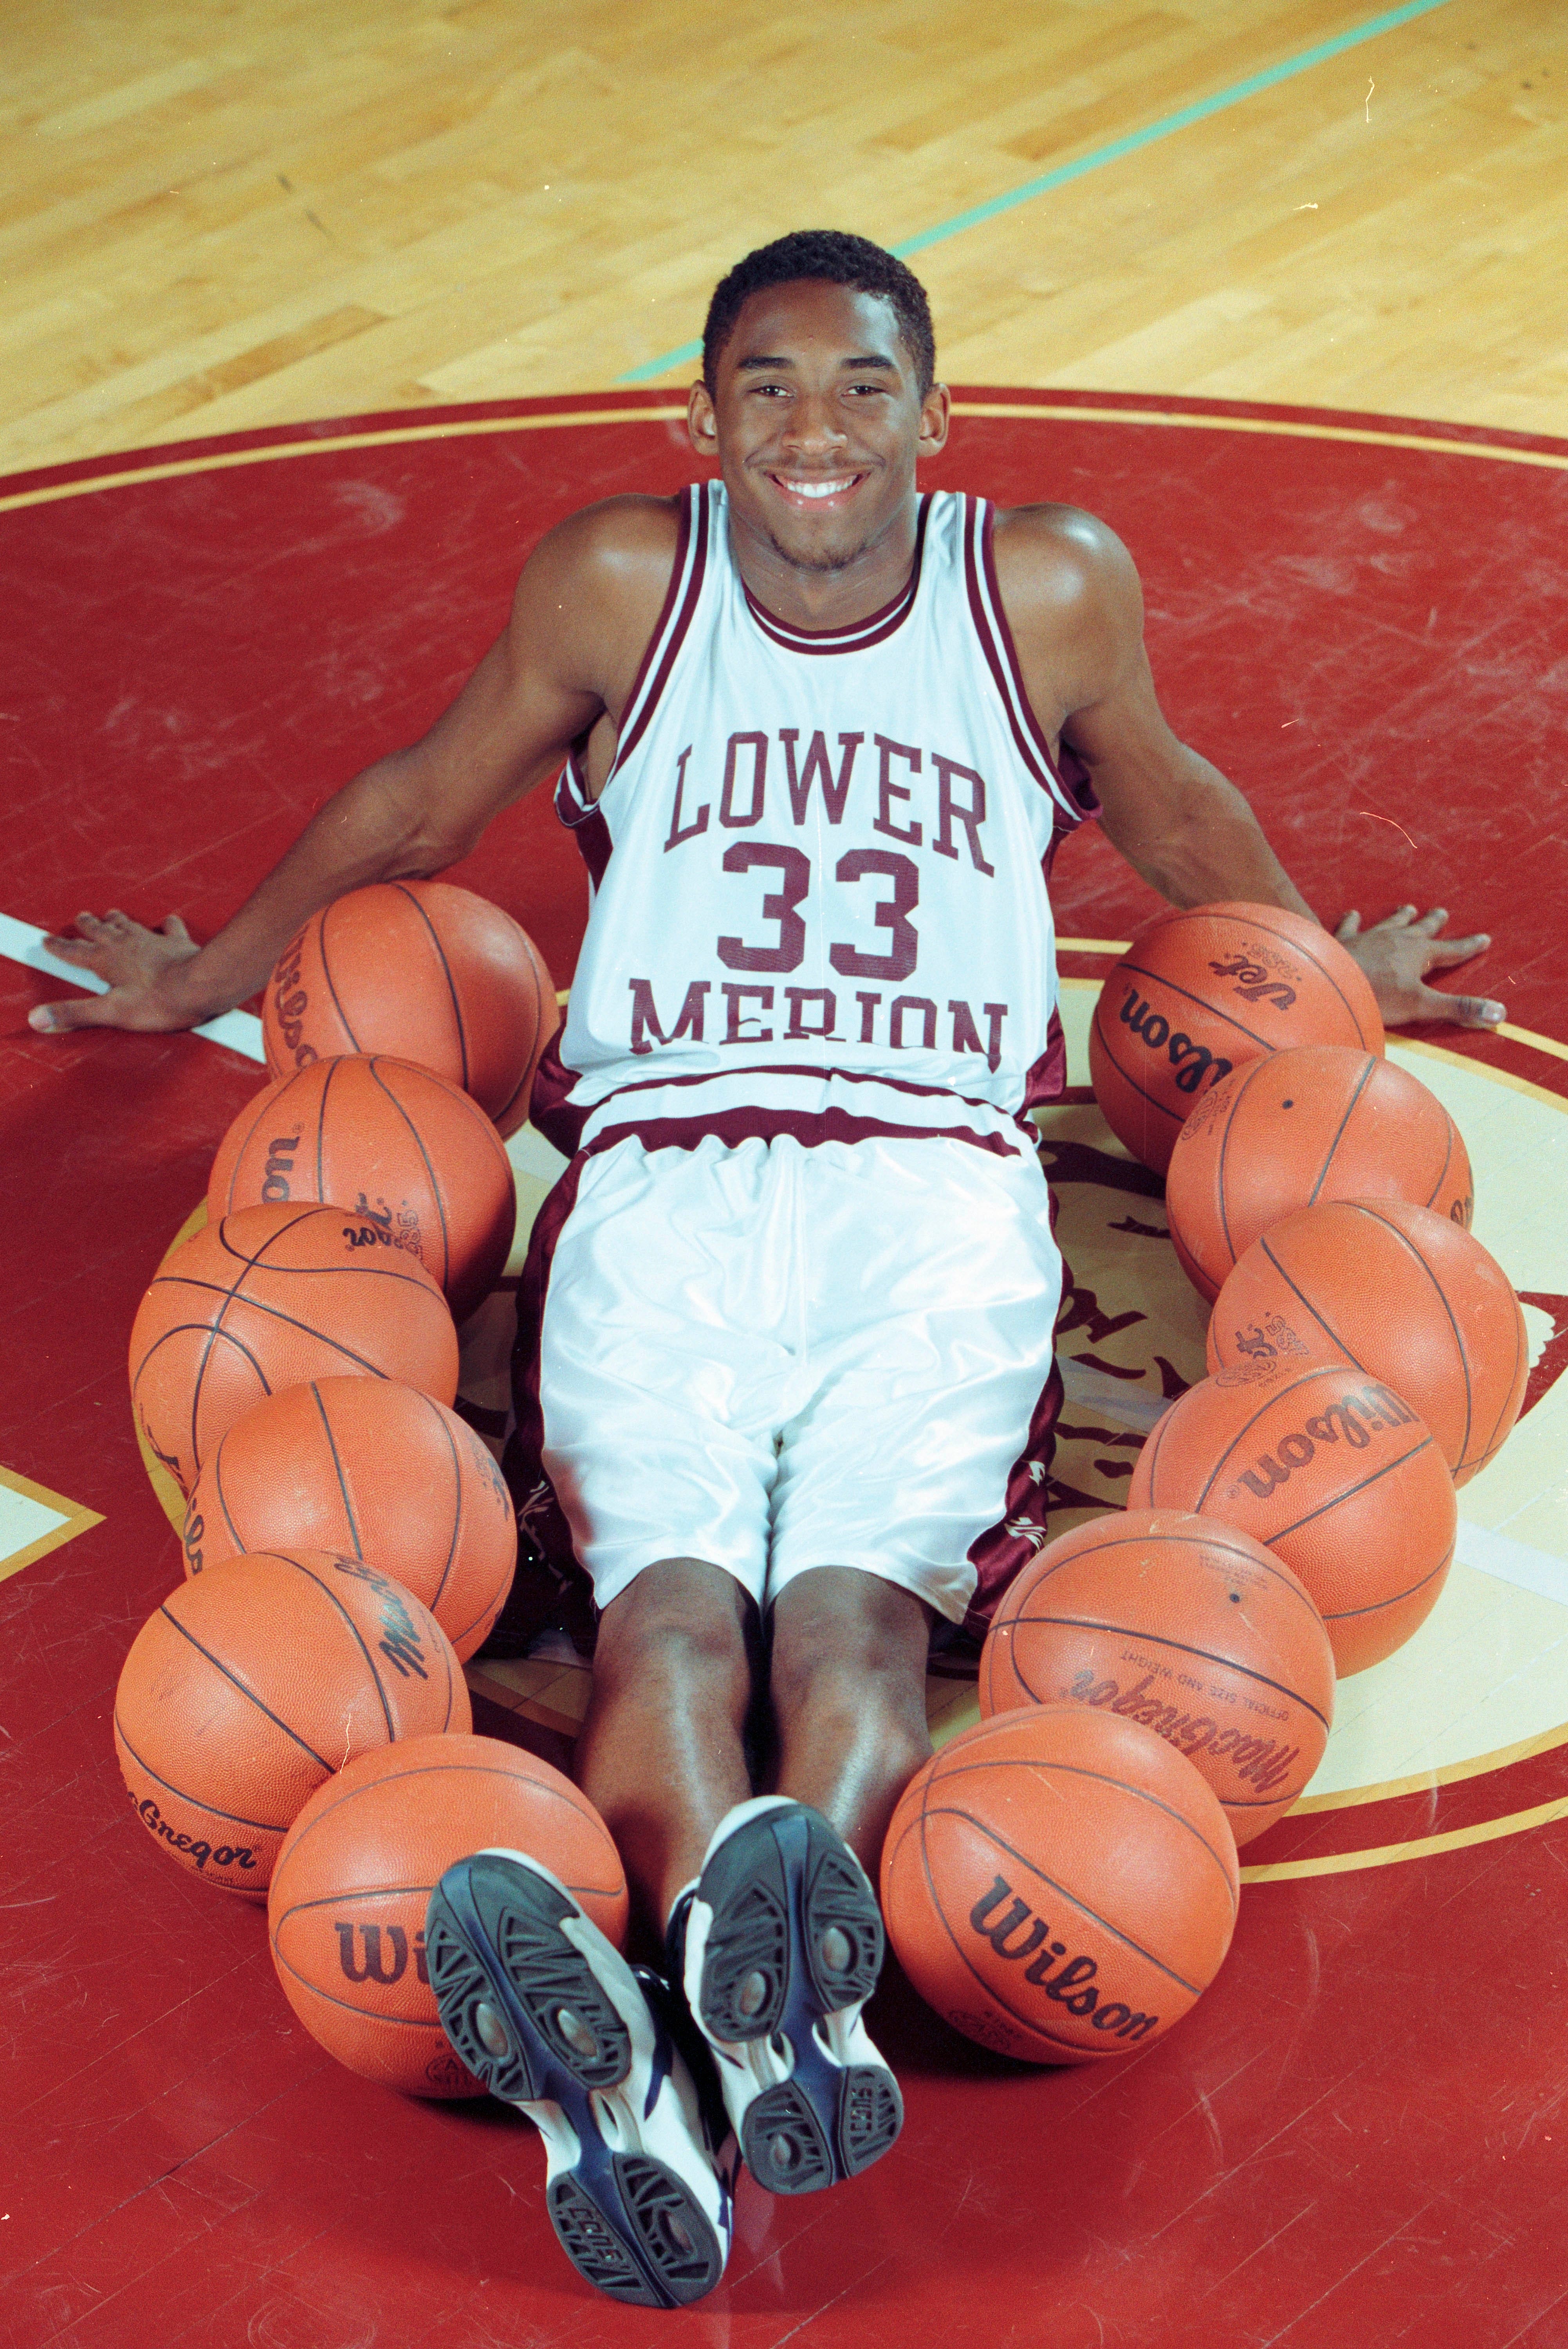 High School Basketball Jersey Kobe Bryant #33 Lower Merion Alternate